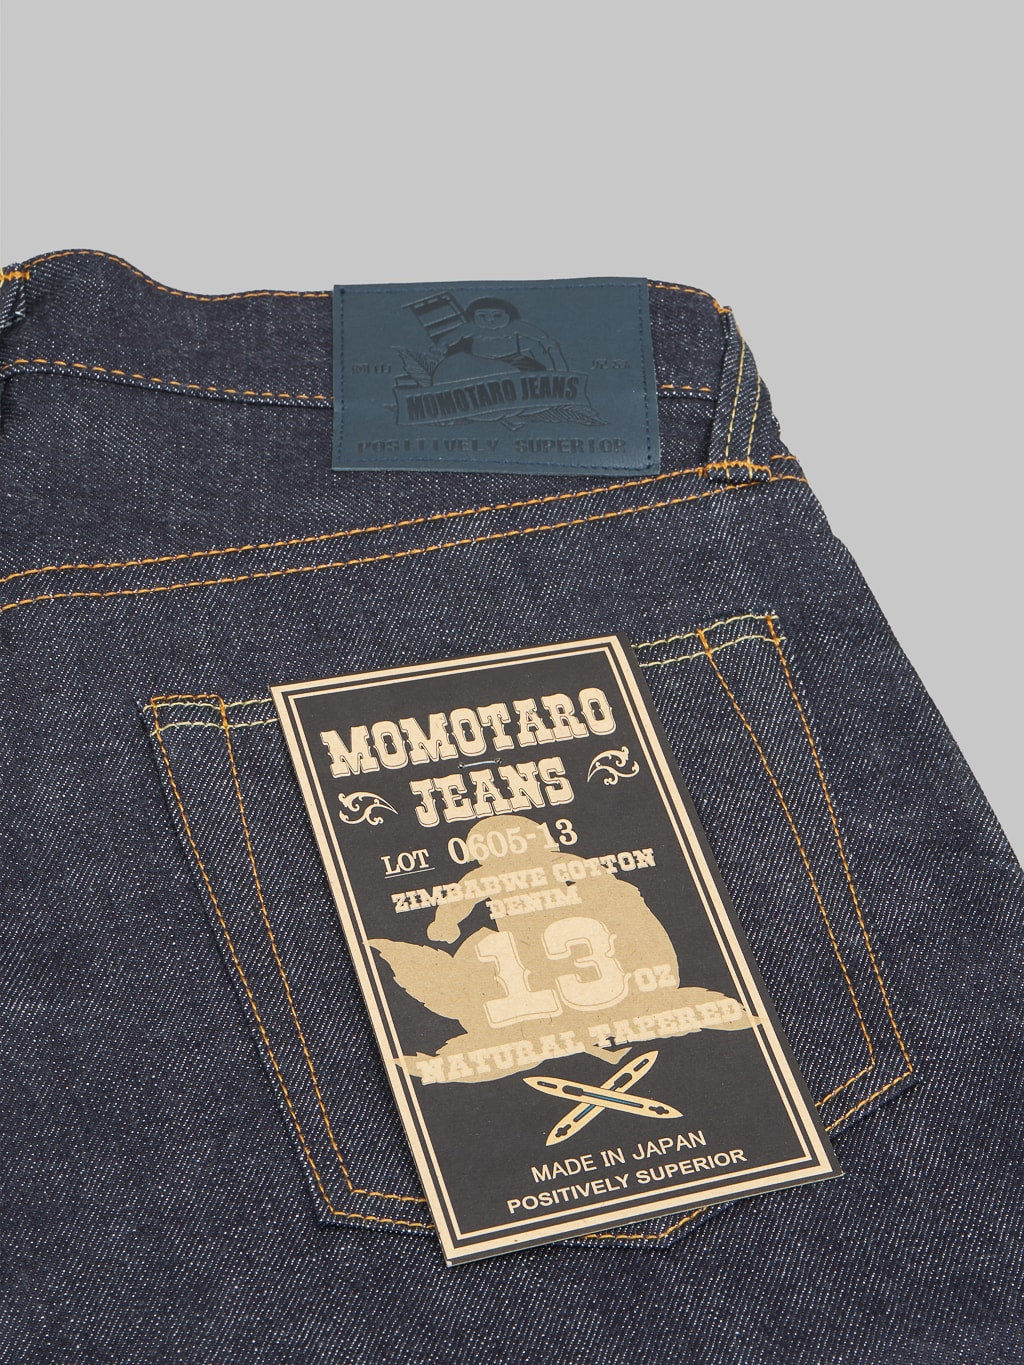 momotaro 0605 13 indigo jeans natural tapered 13oz pocket flasher